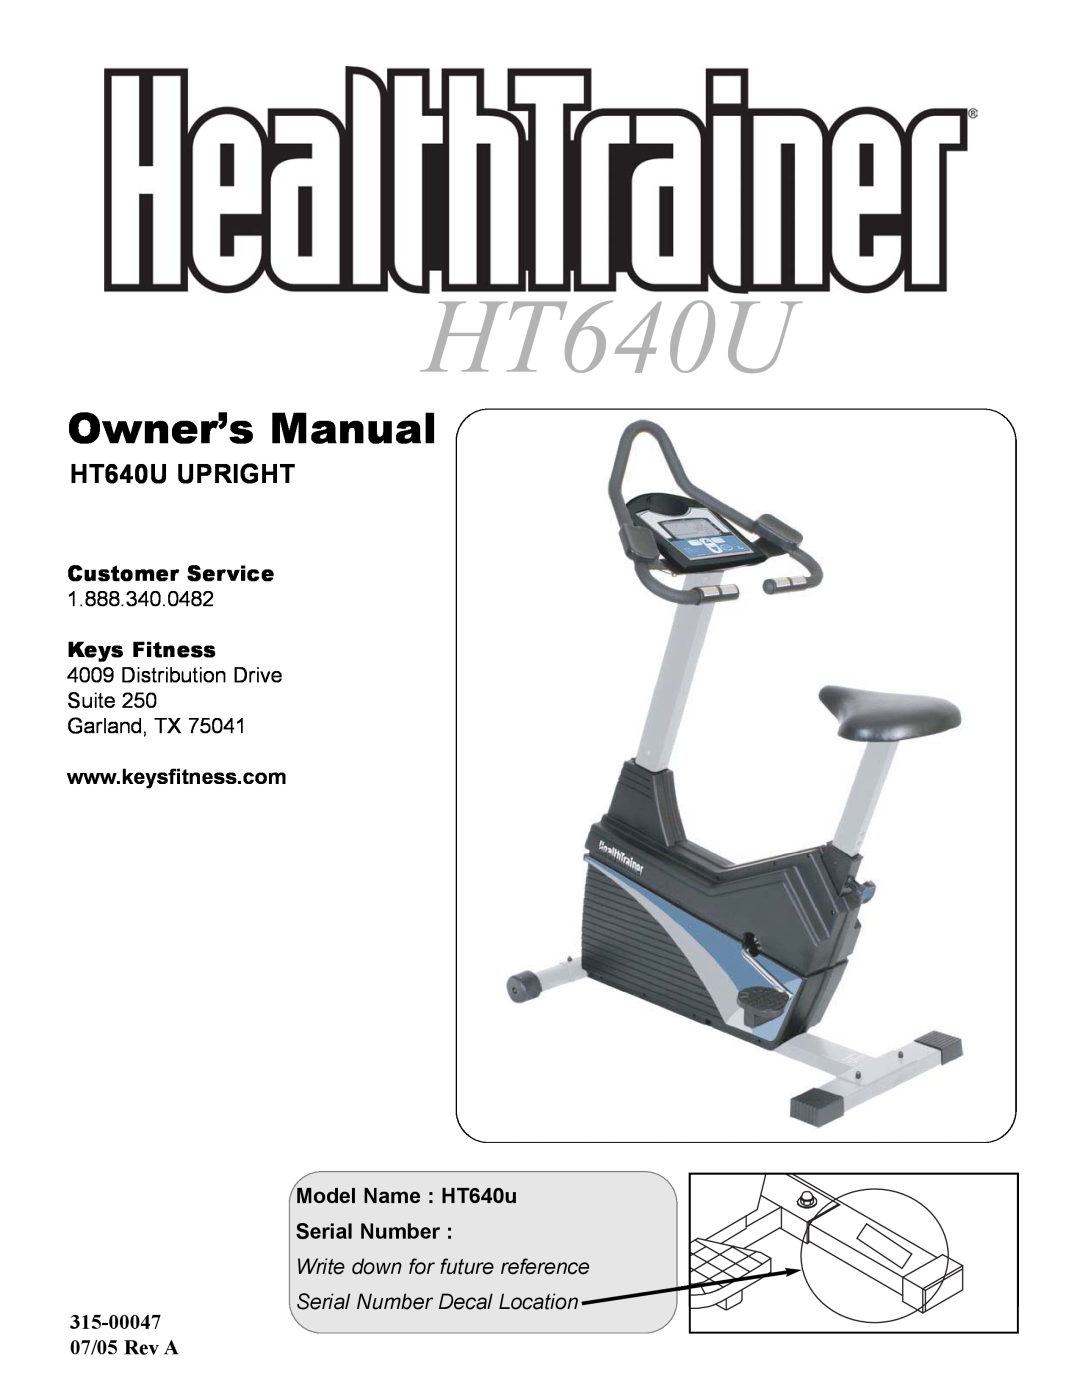 Keys Fitness owner manual Owner’s Manual, HT640U UPRIGHT, Customer Service, 1.888.340.0482, Keys Fitness 